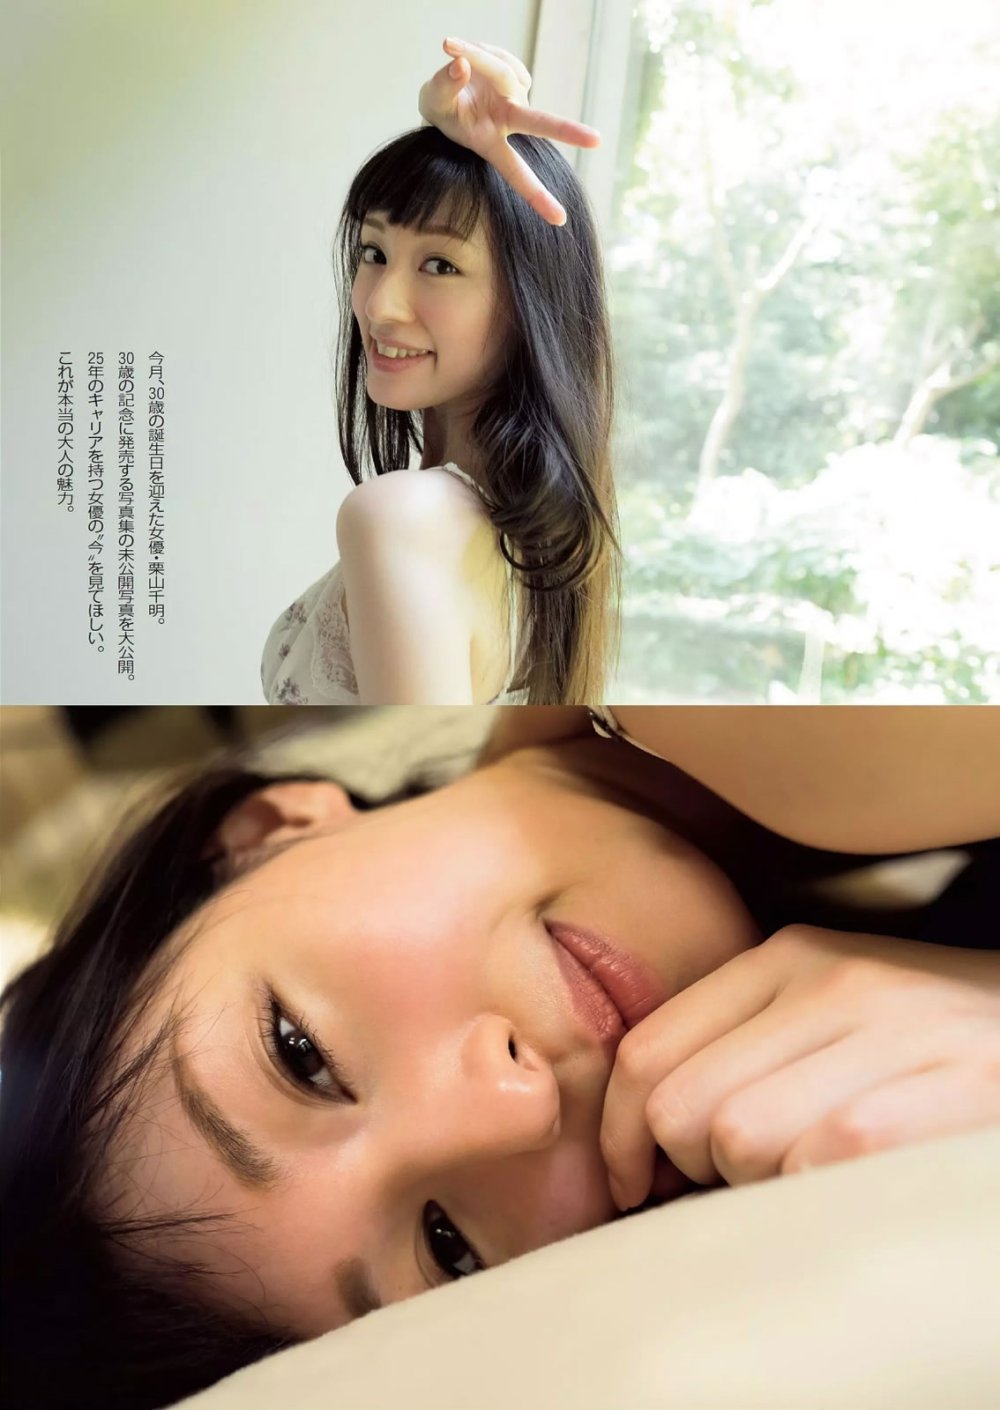 Chiaki Kuriyama Sexy and Hottest Photos , Latest Pics